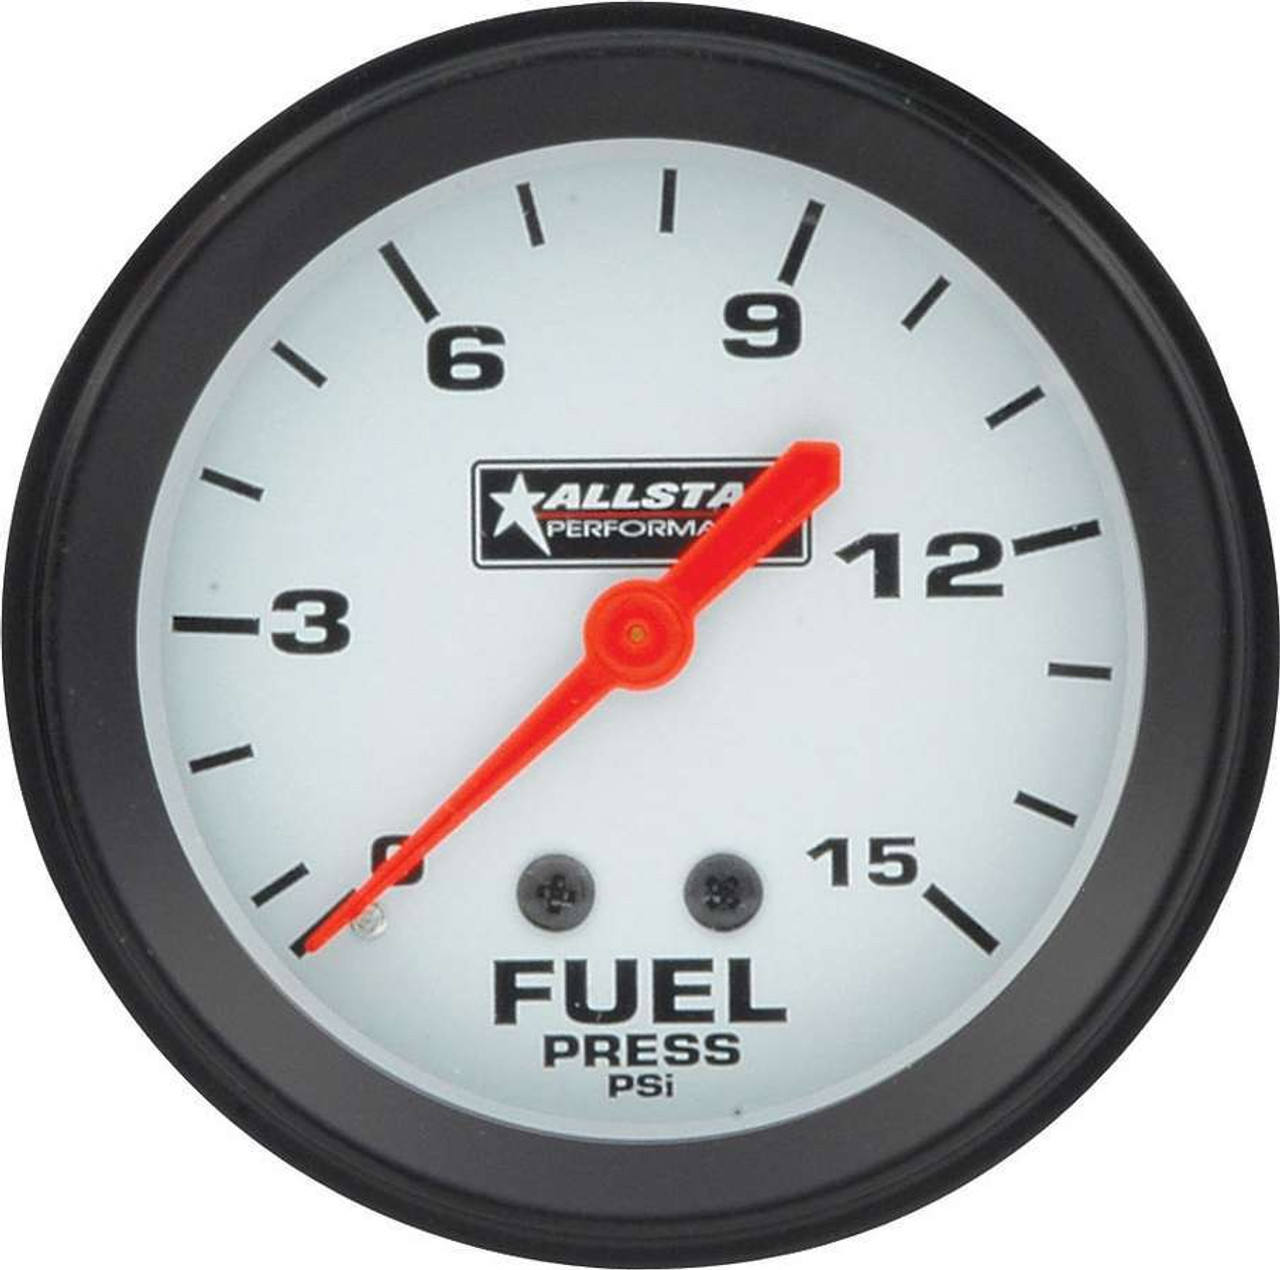 ALL Fuel Pressure Gauge 0-15PSI 2-5/8in ALL80098